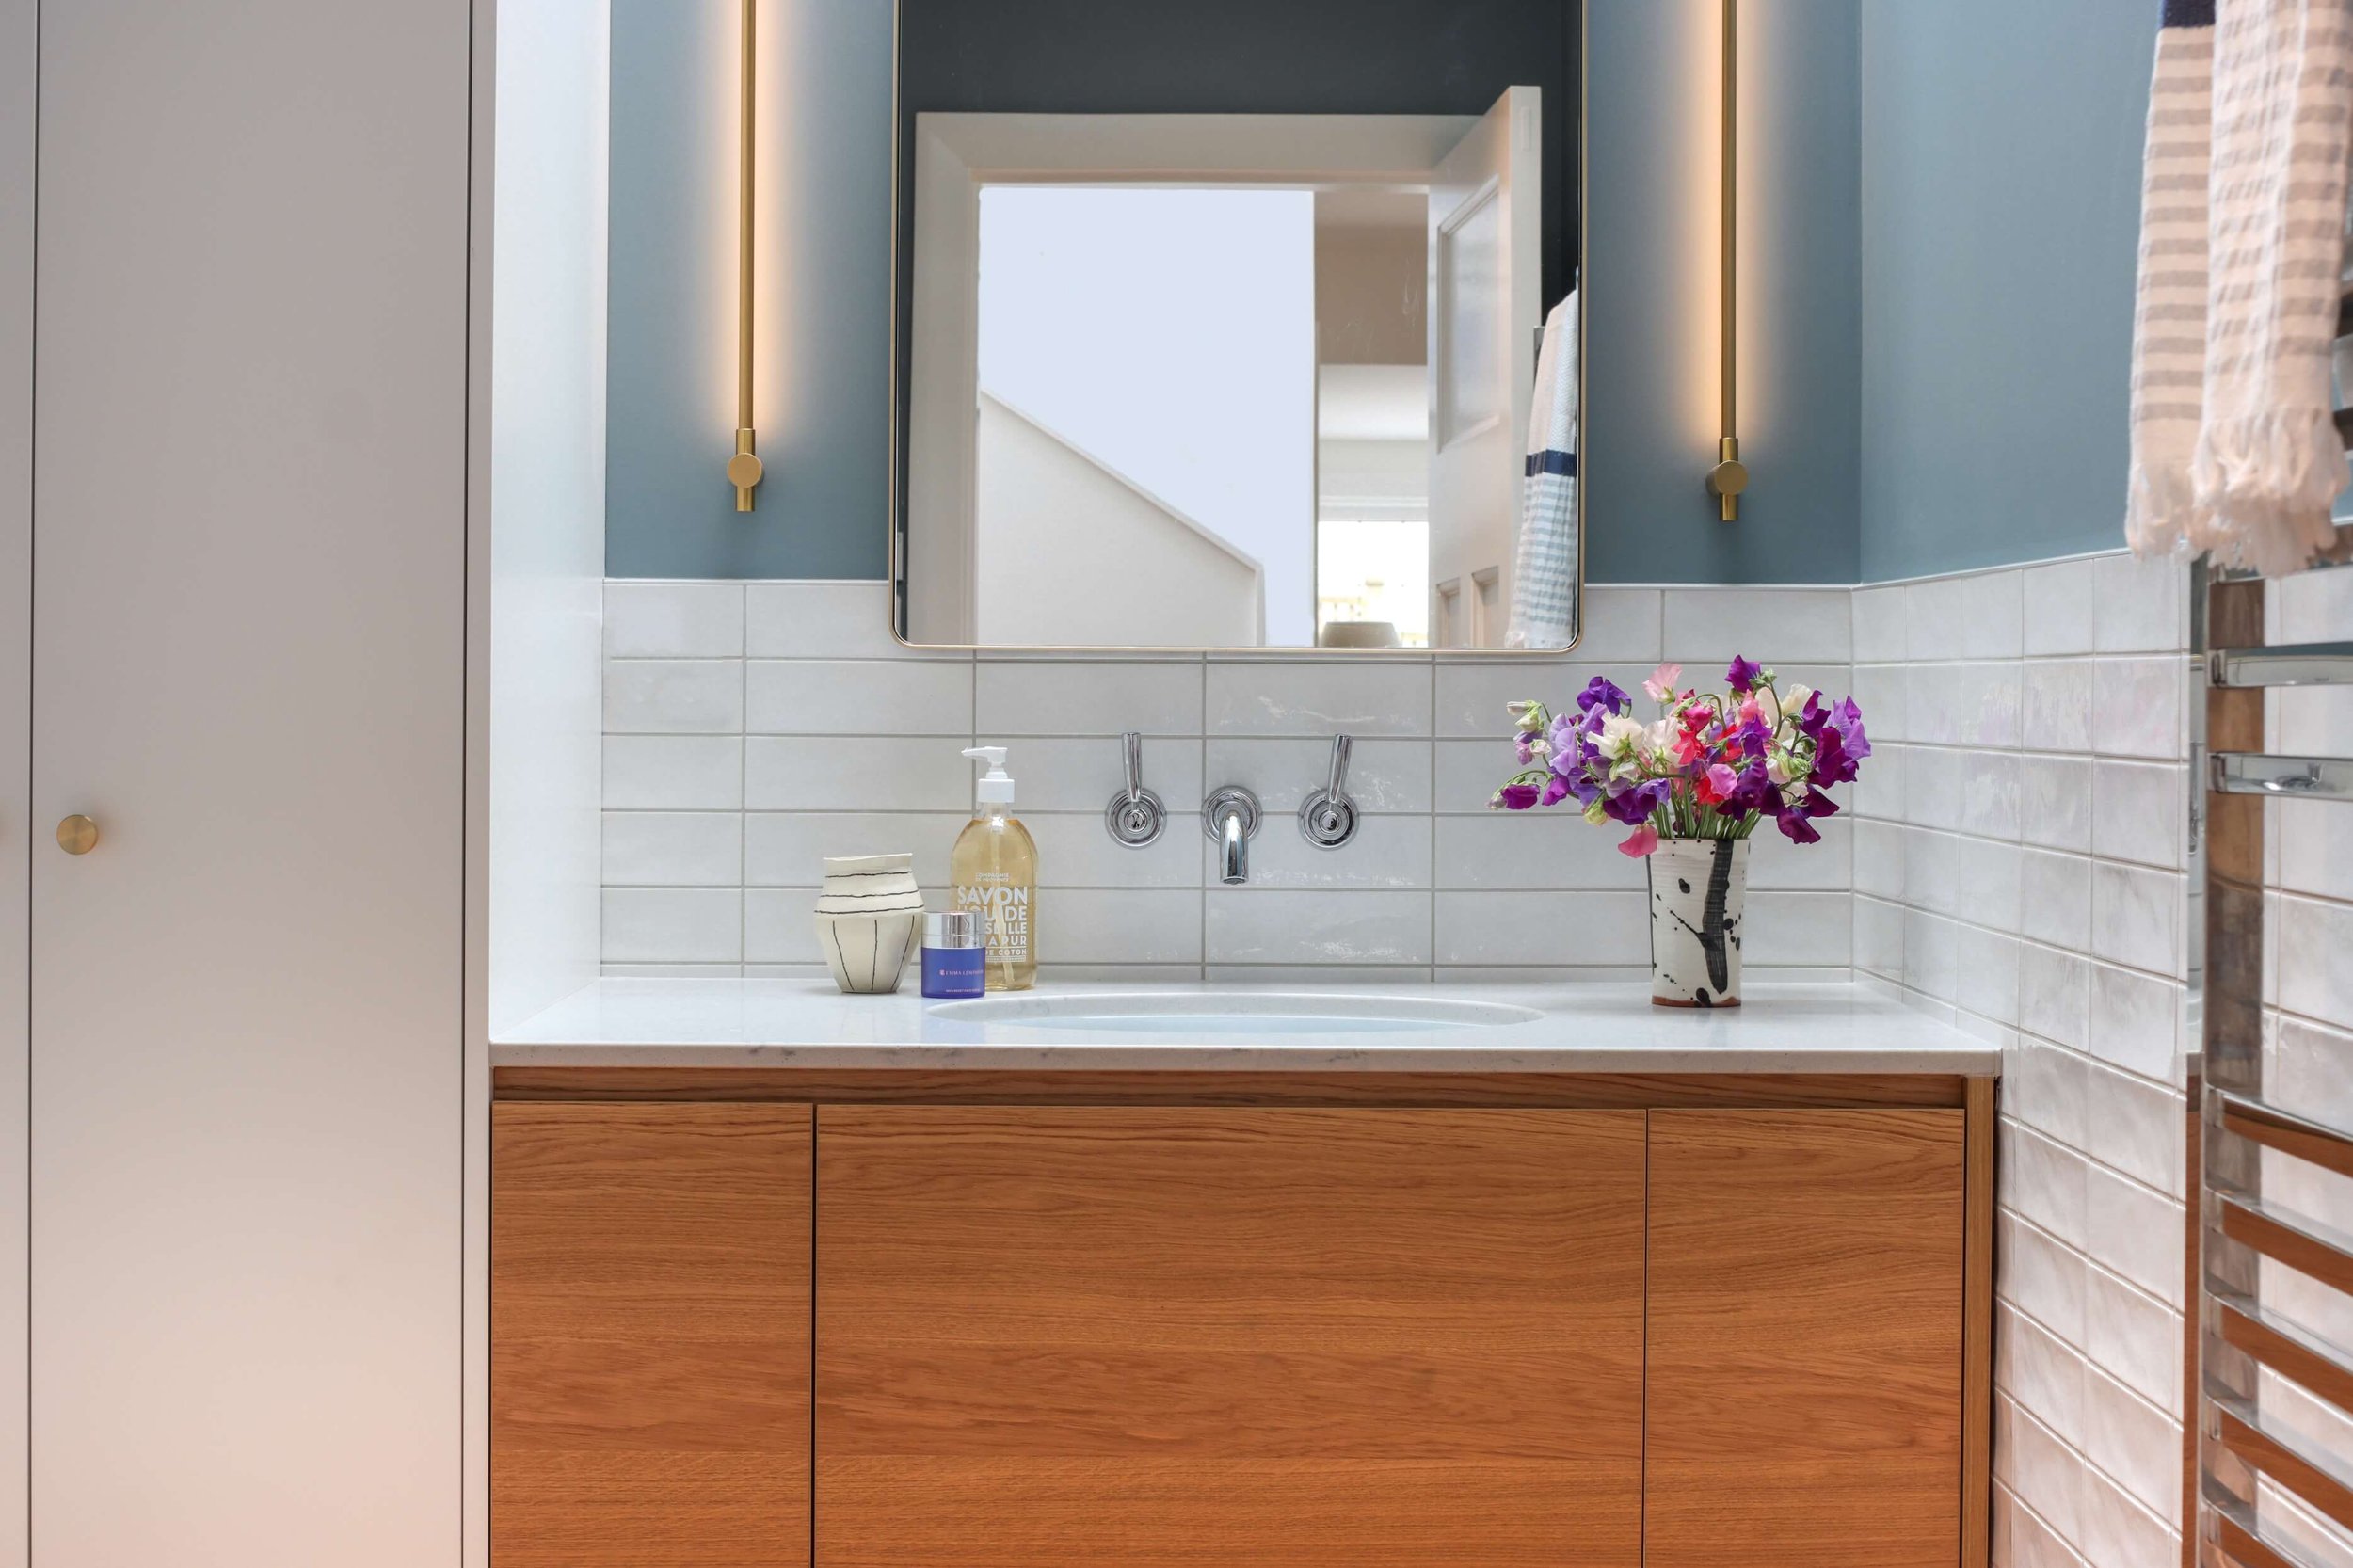 Charlotte Minty Interior Design Karori House Bathroom Vanity.jpg